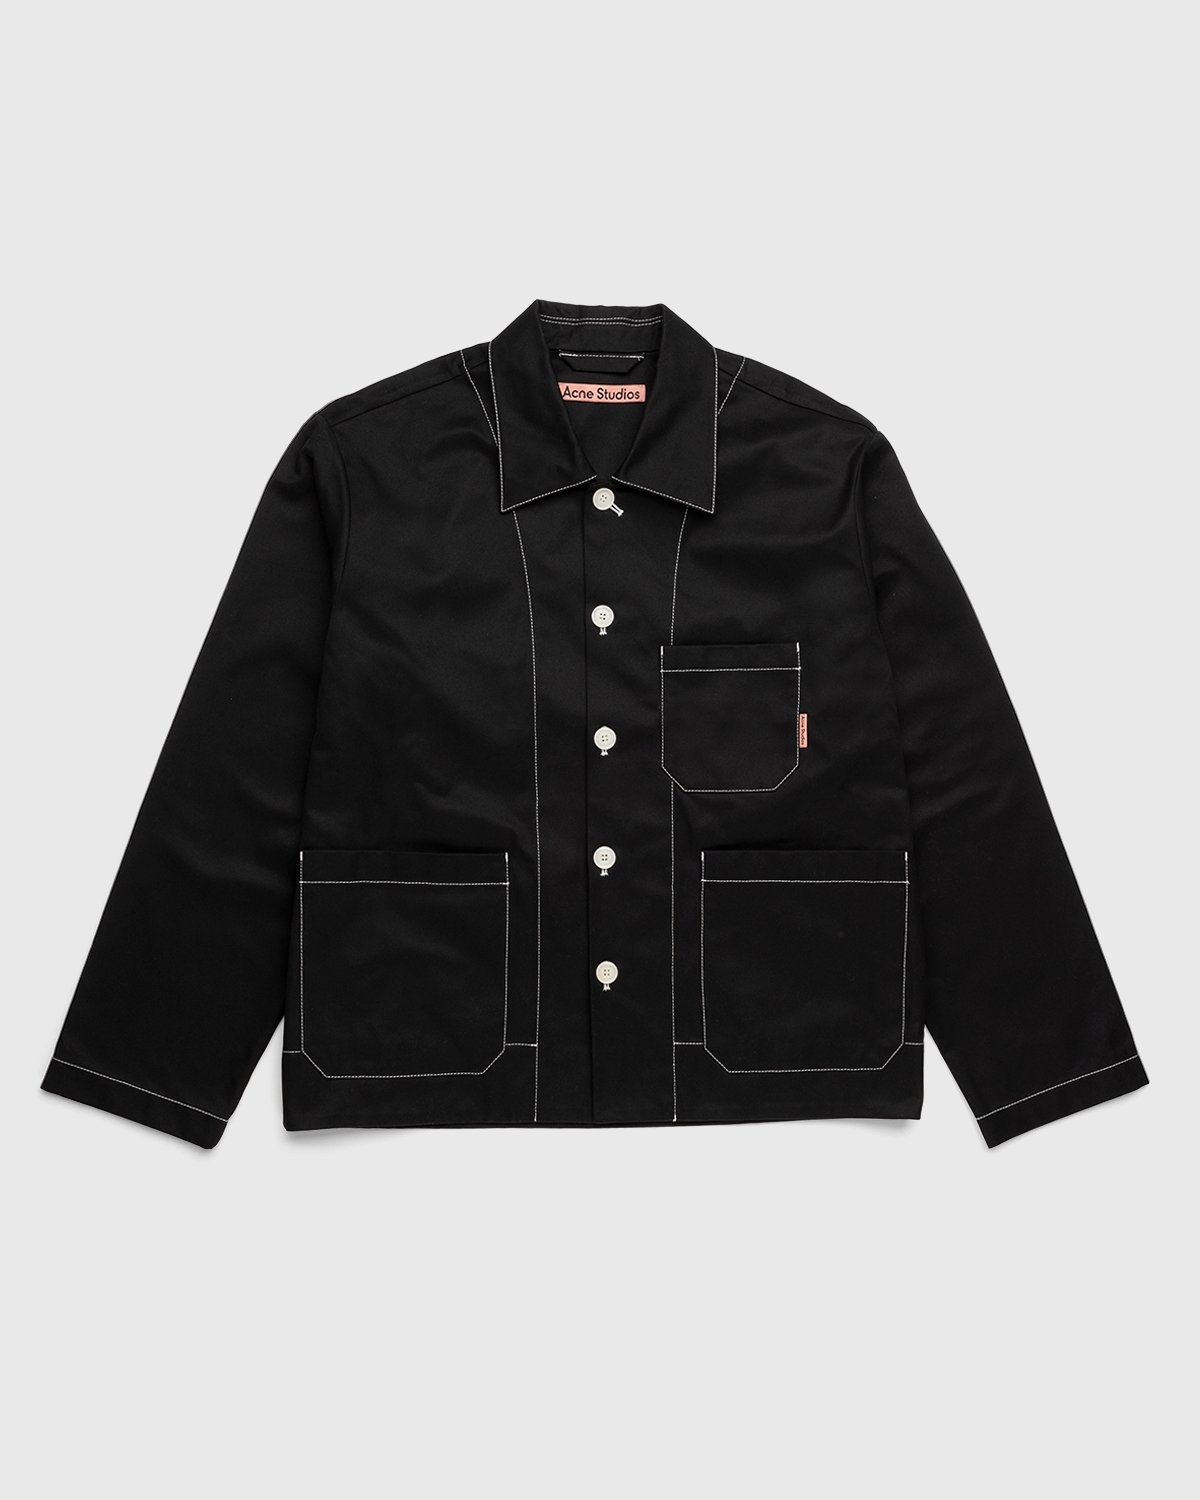 Acne Studios – Heavy Twill Jacket - Outerwear - Black - Image 1